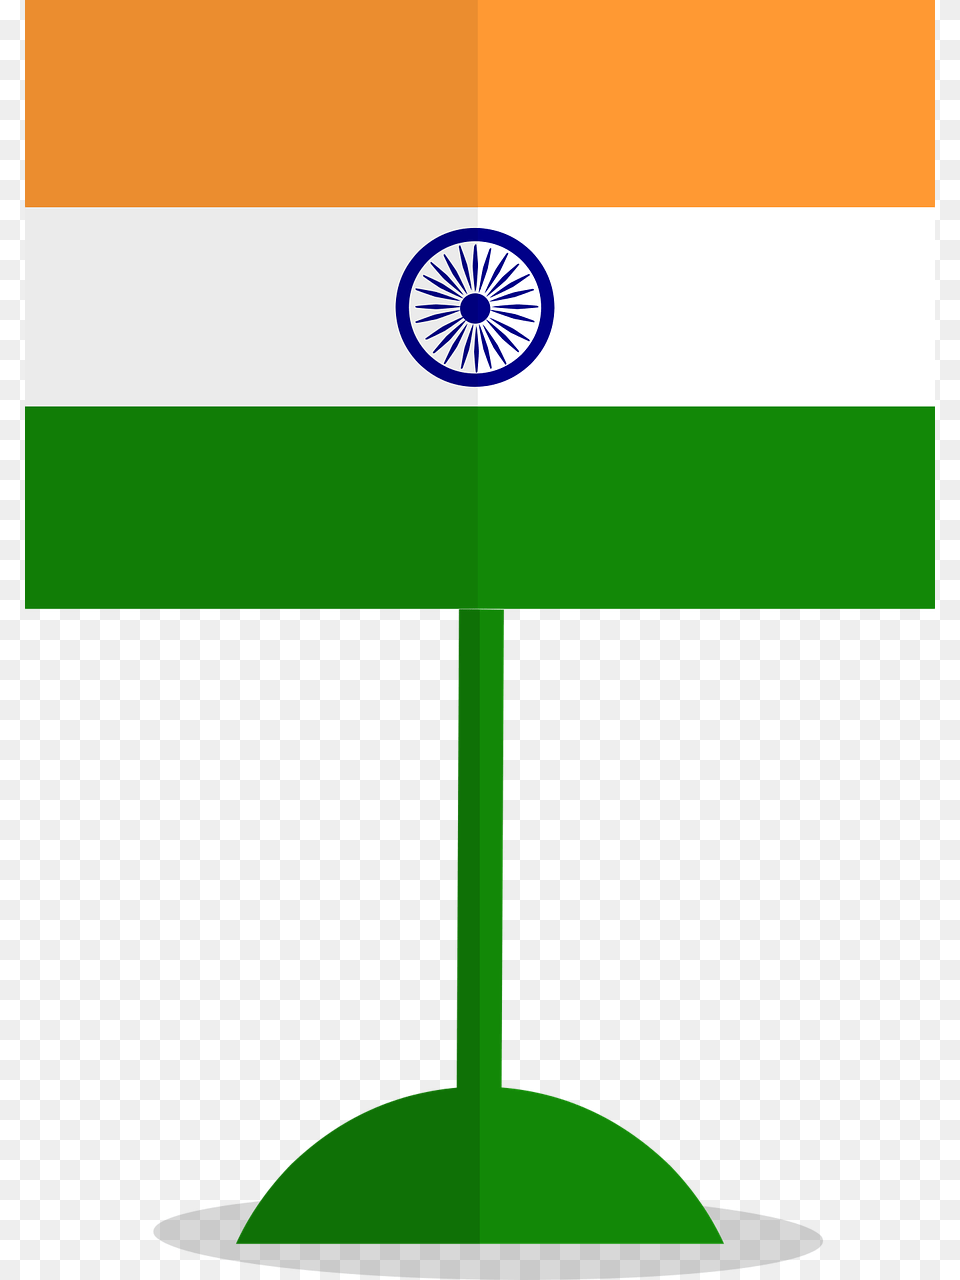 Previewindian Flag Vector Wallpaper Flag Of India, Machine, Wheel, Cross, Symbol Png Image